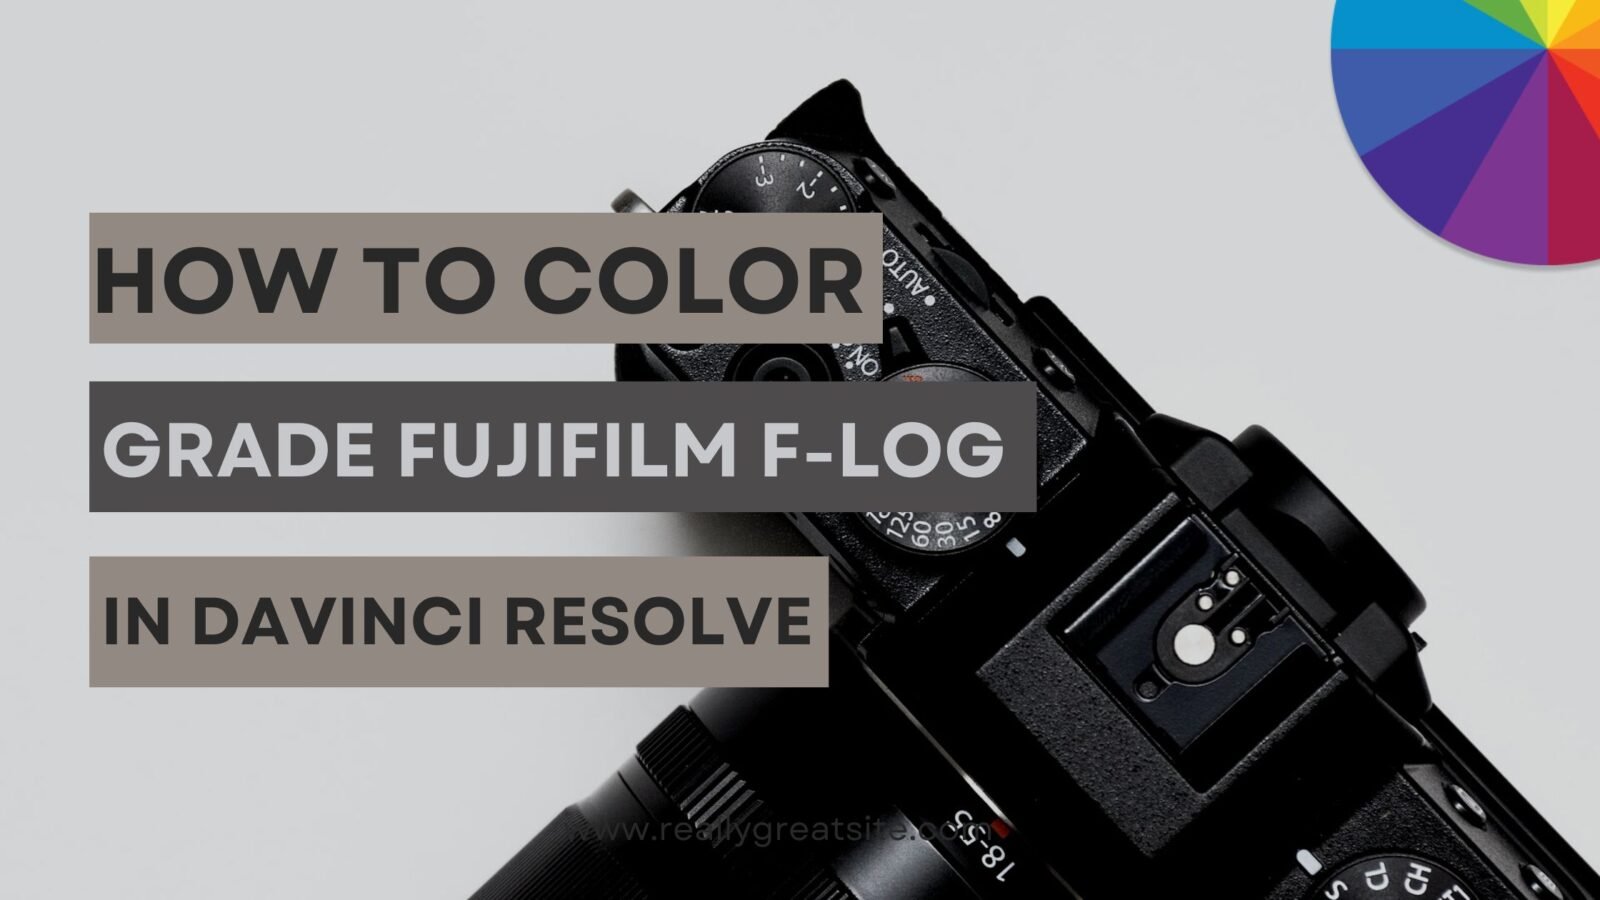 How To Color Grade Fujifilm F-LOG In Davinci Resolve